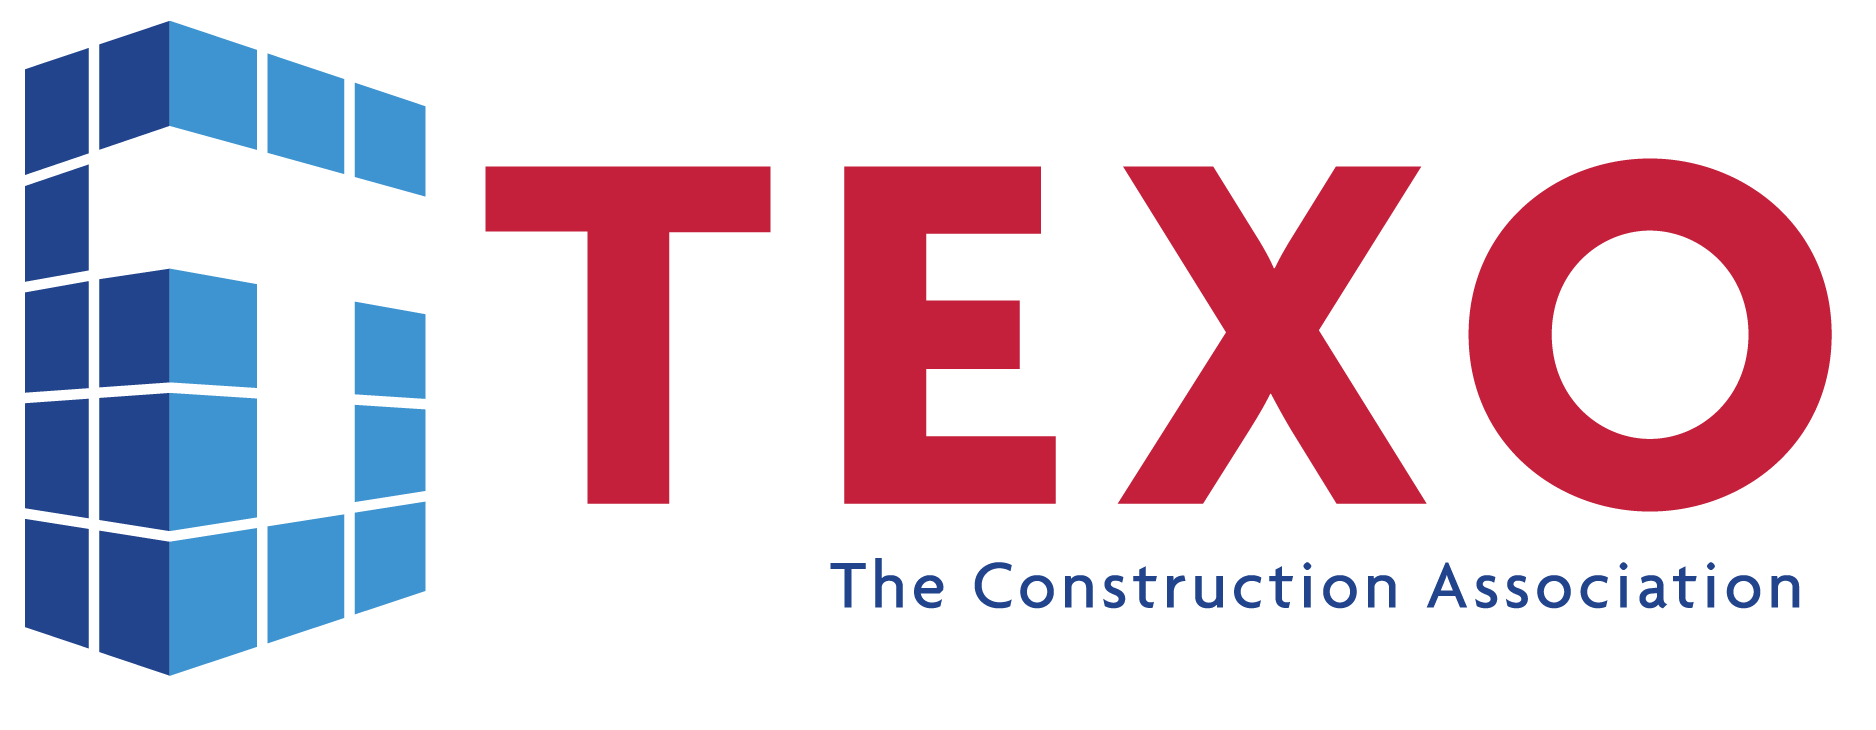 TEXO, The Construction Association